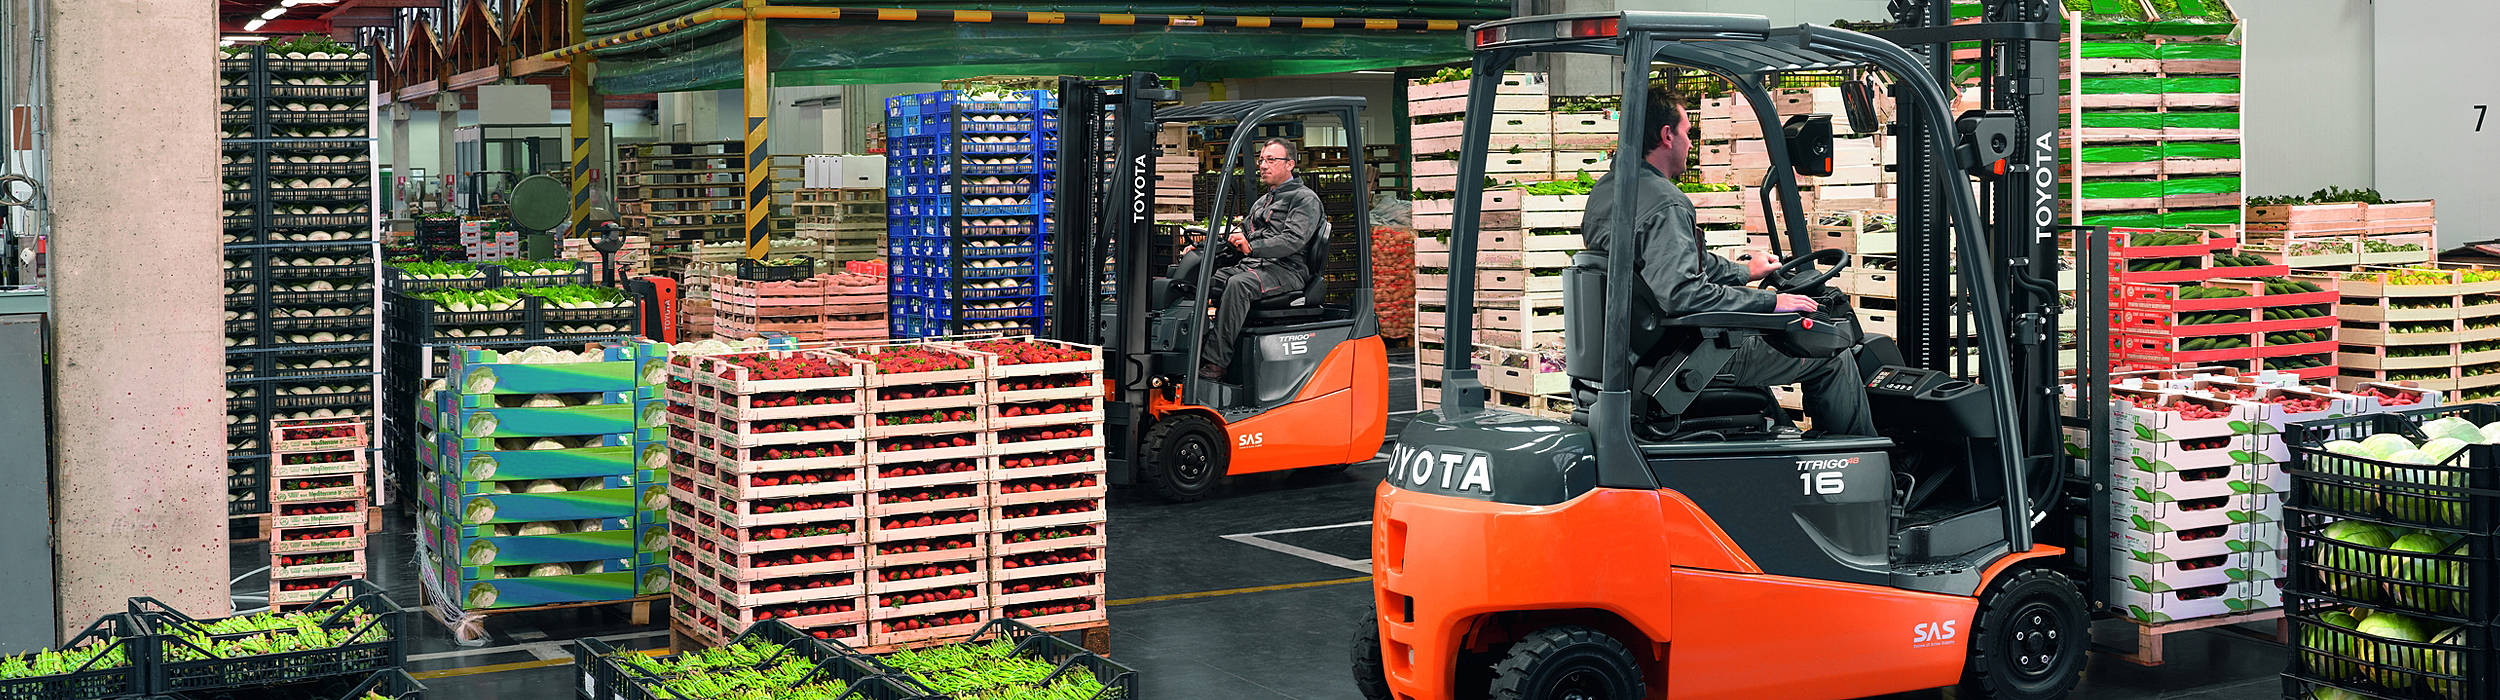 Toyota Traigo electric forklift trucks working in food industry